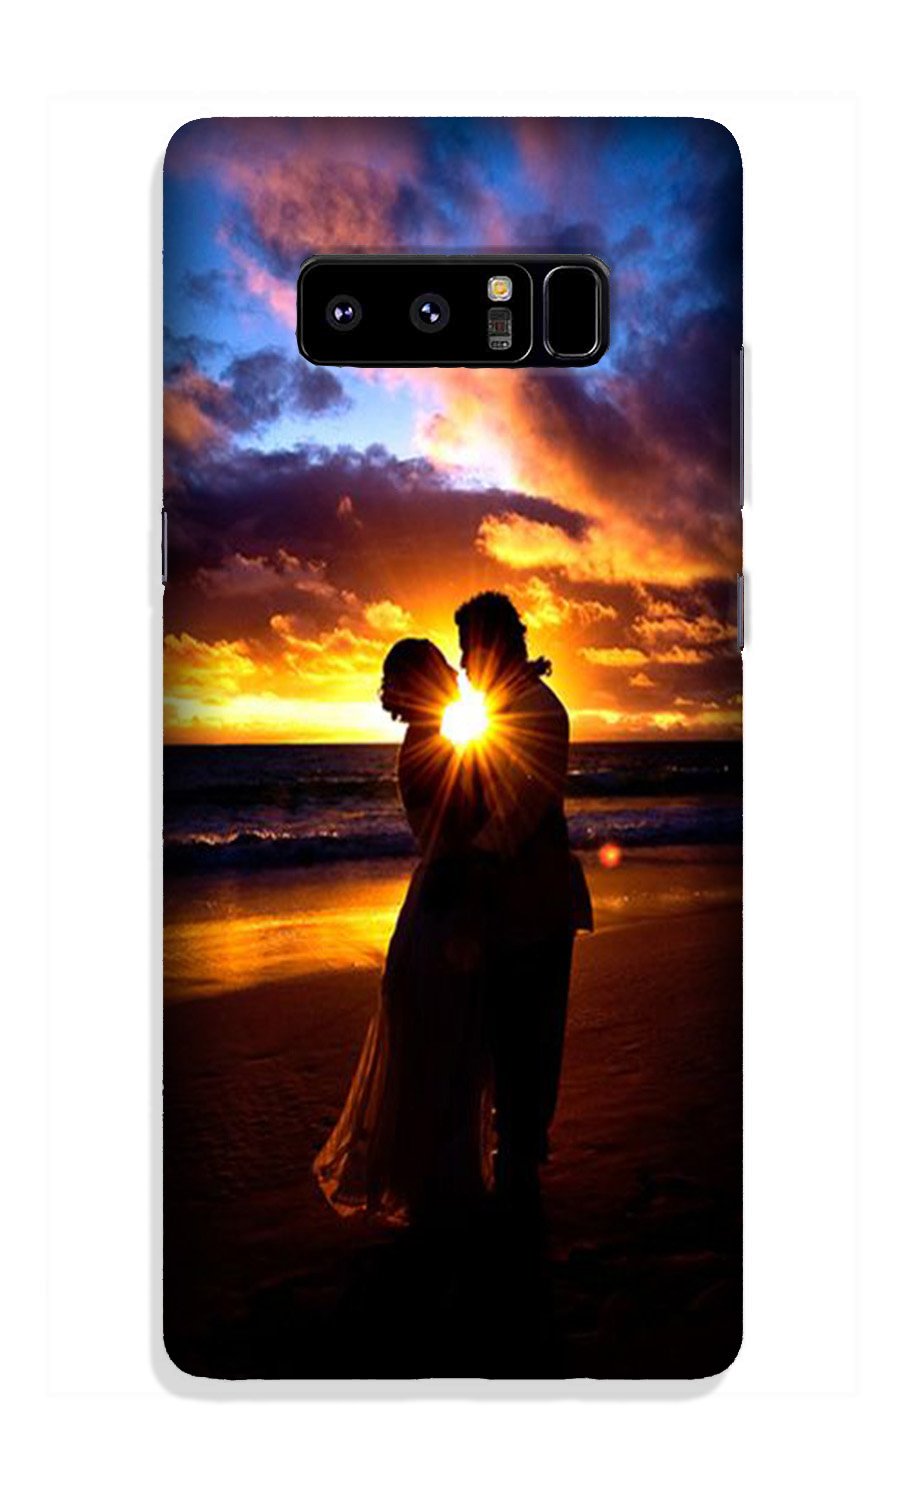 Couple Sea shore Case for Galaxy Note 8